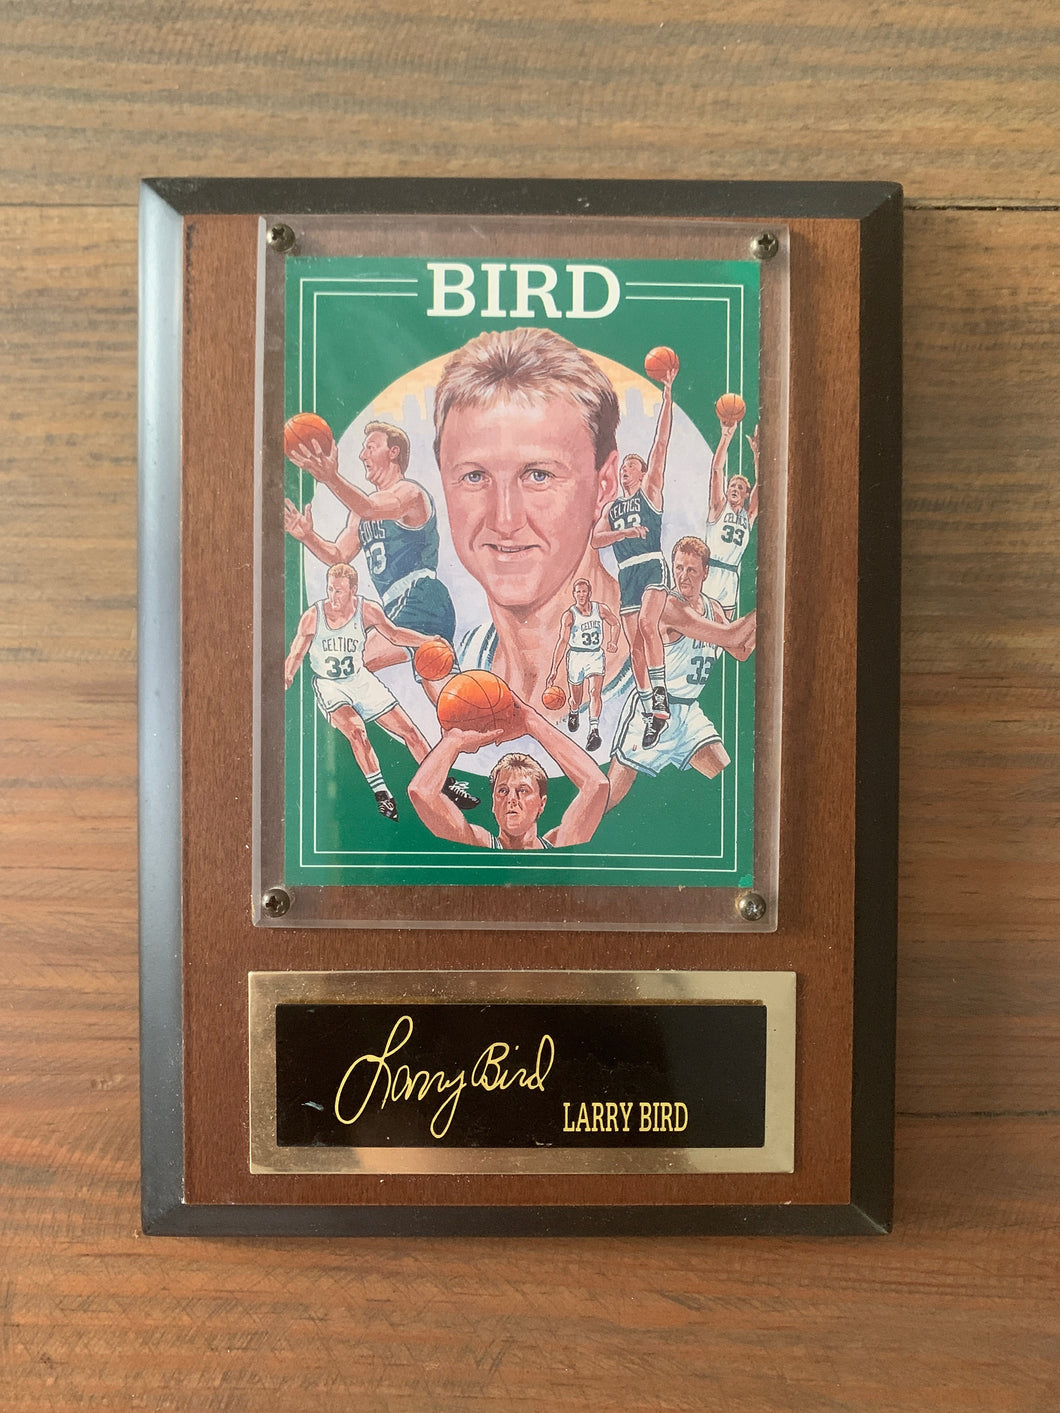 1993 Larry Bird Boston Celtics Plaque